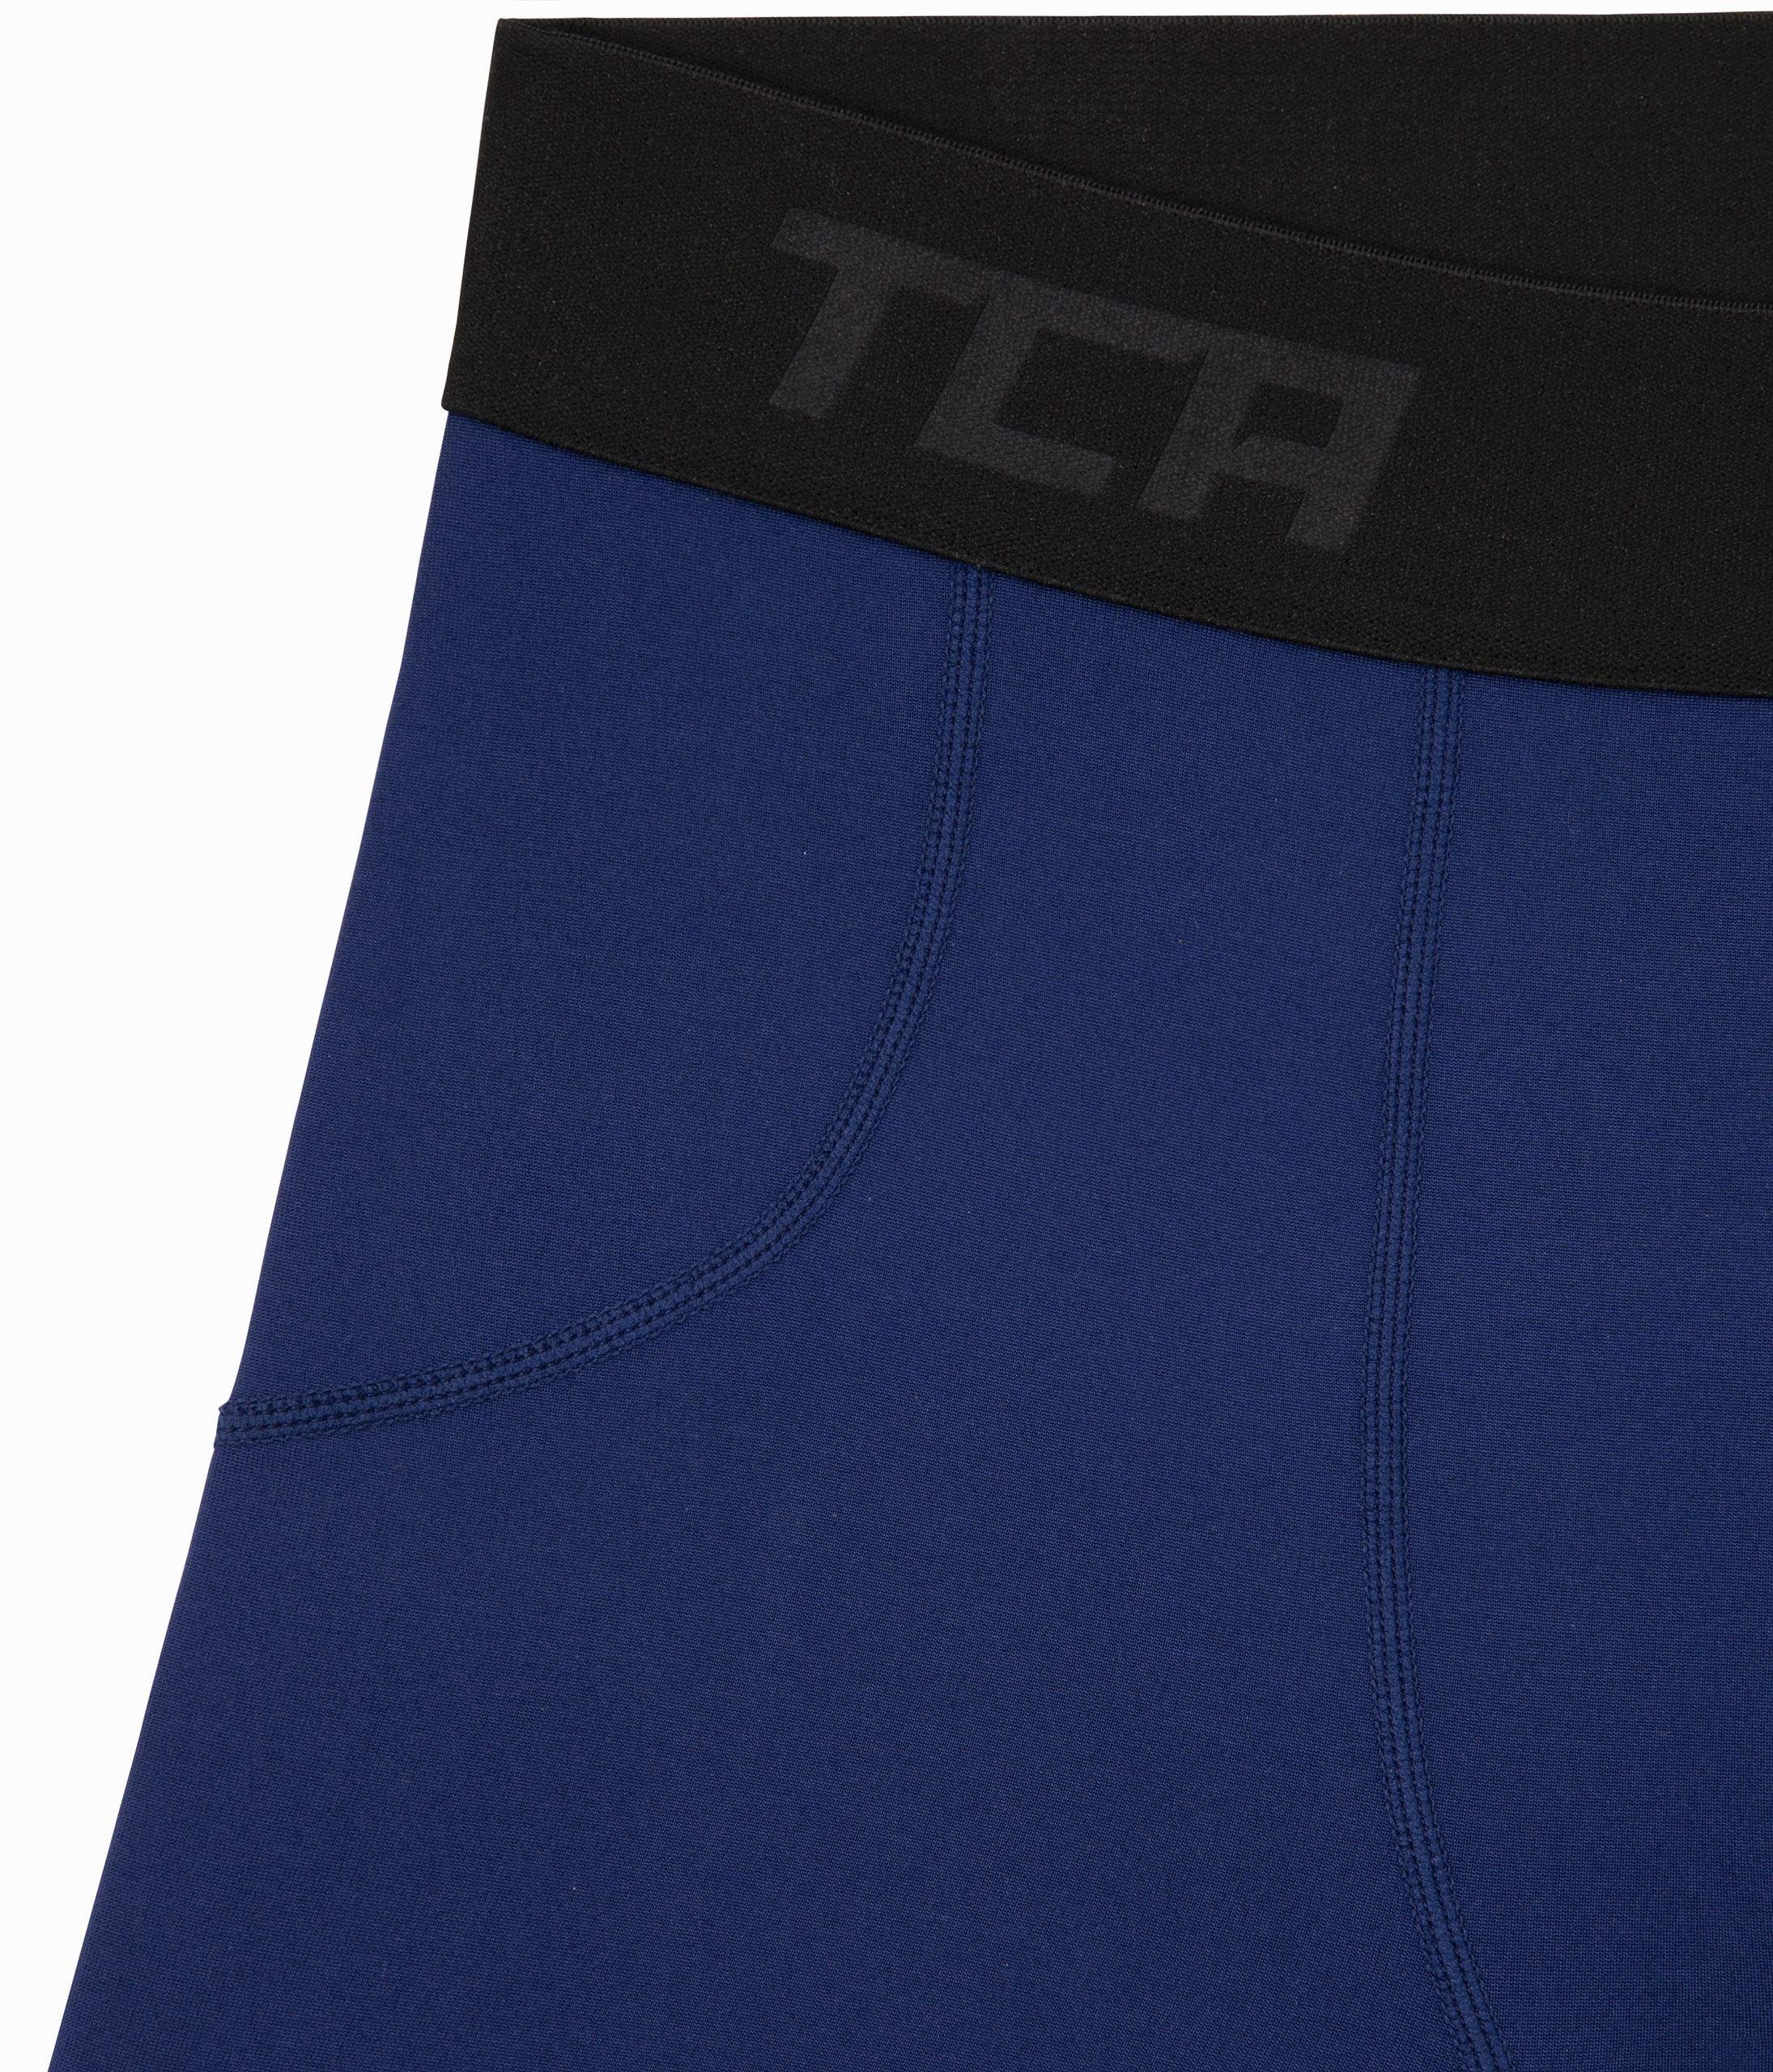 TCA Unterziehshirt - Jungen Shorts Blau/Schwarz Kompressions SuperThermal TCA